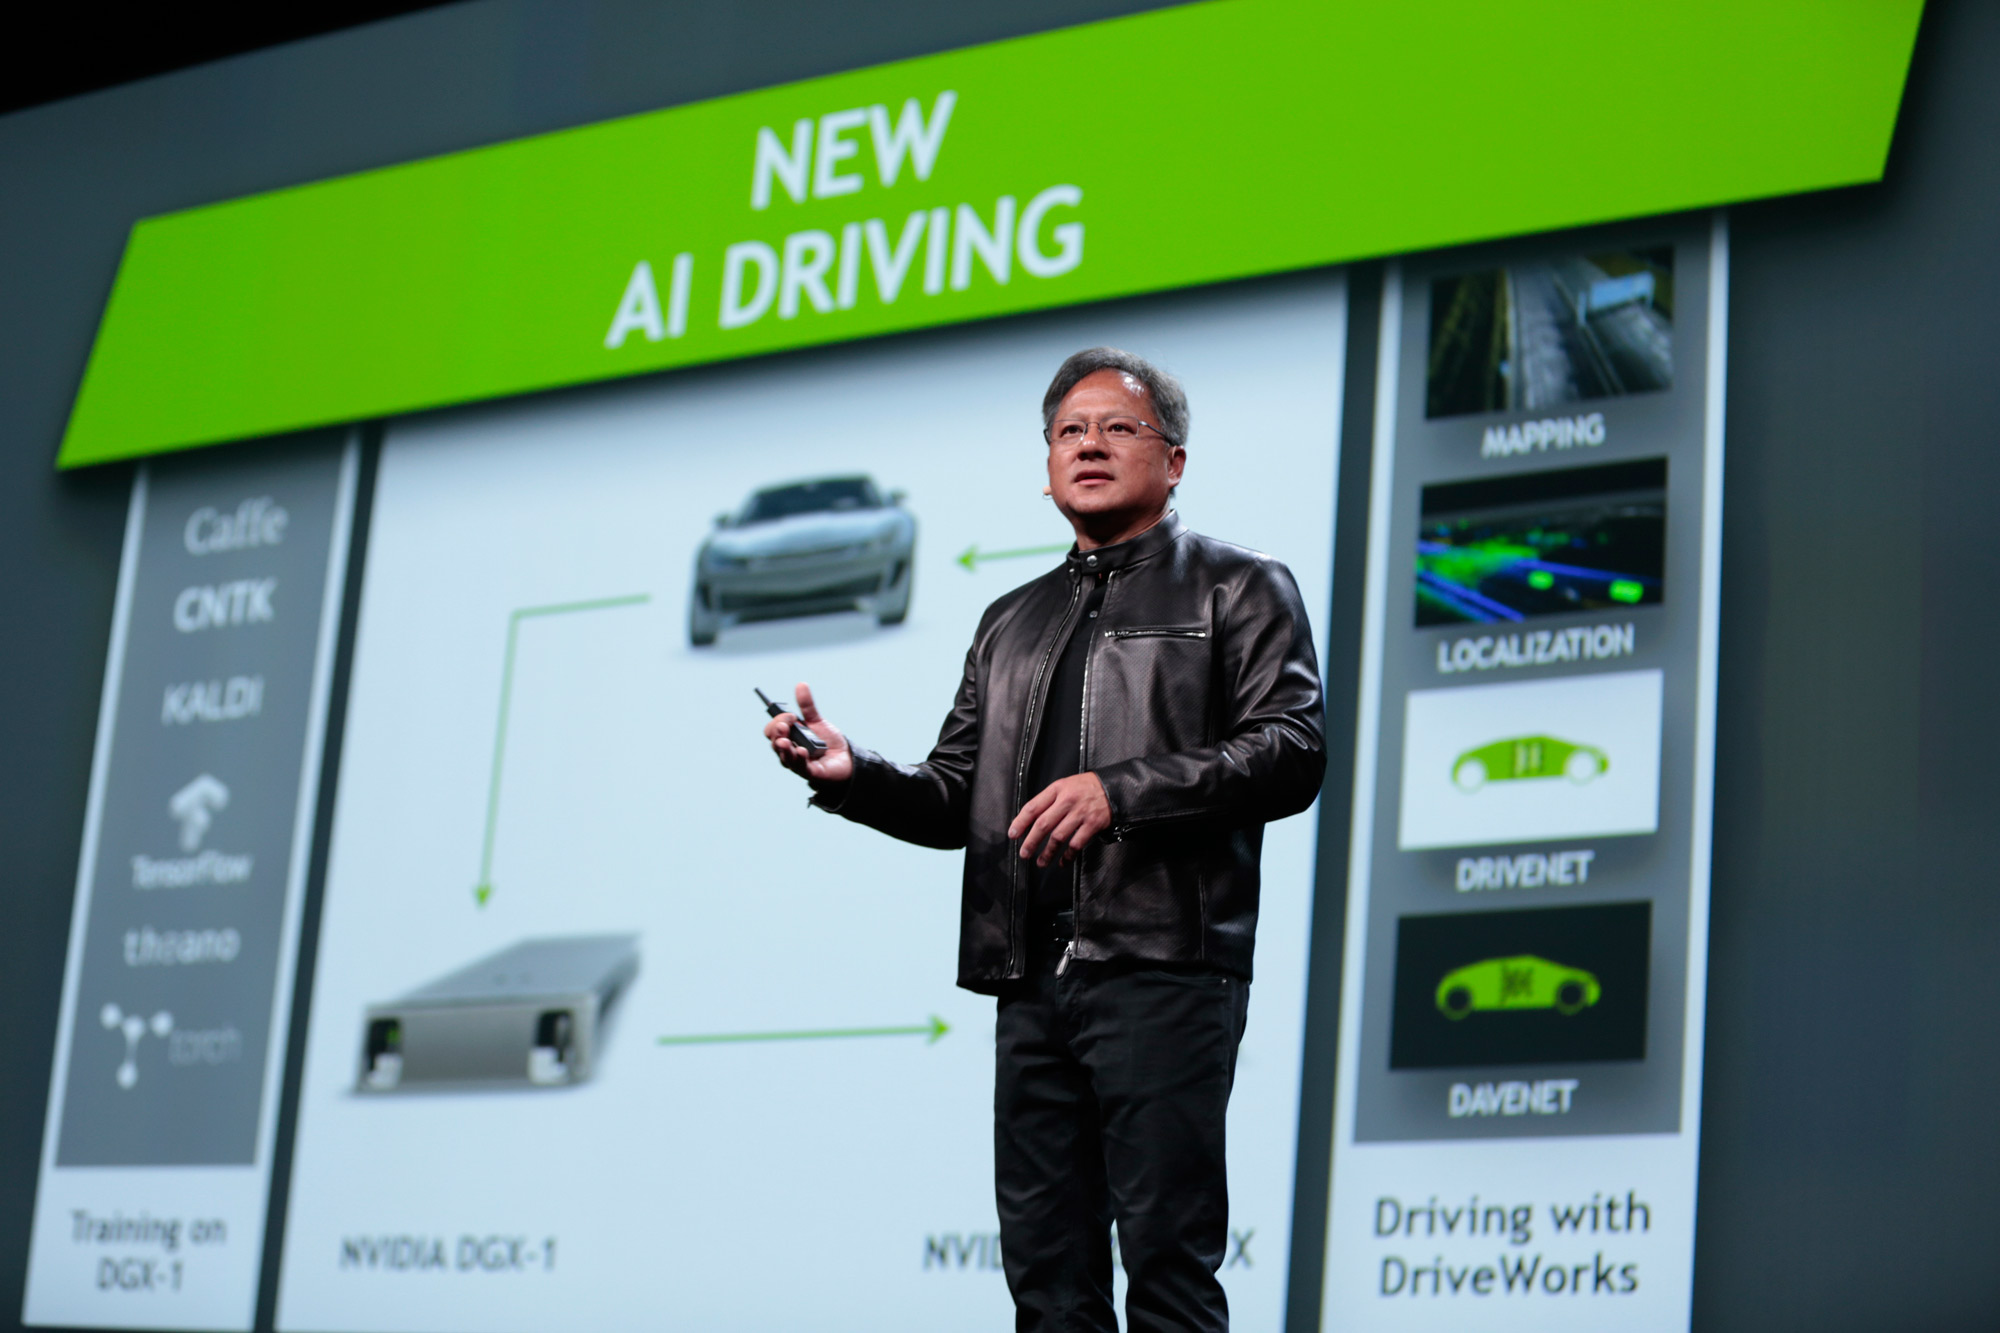 nvidia drive px 2 for autocruise revealed